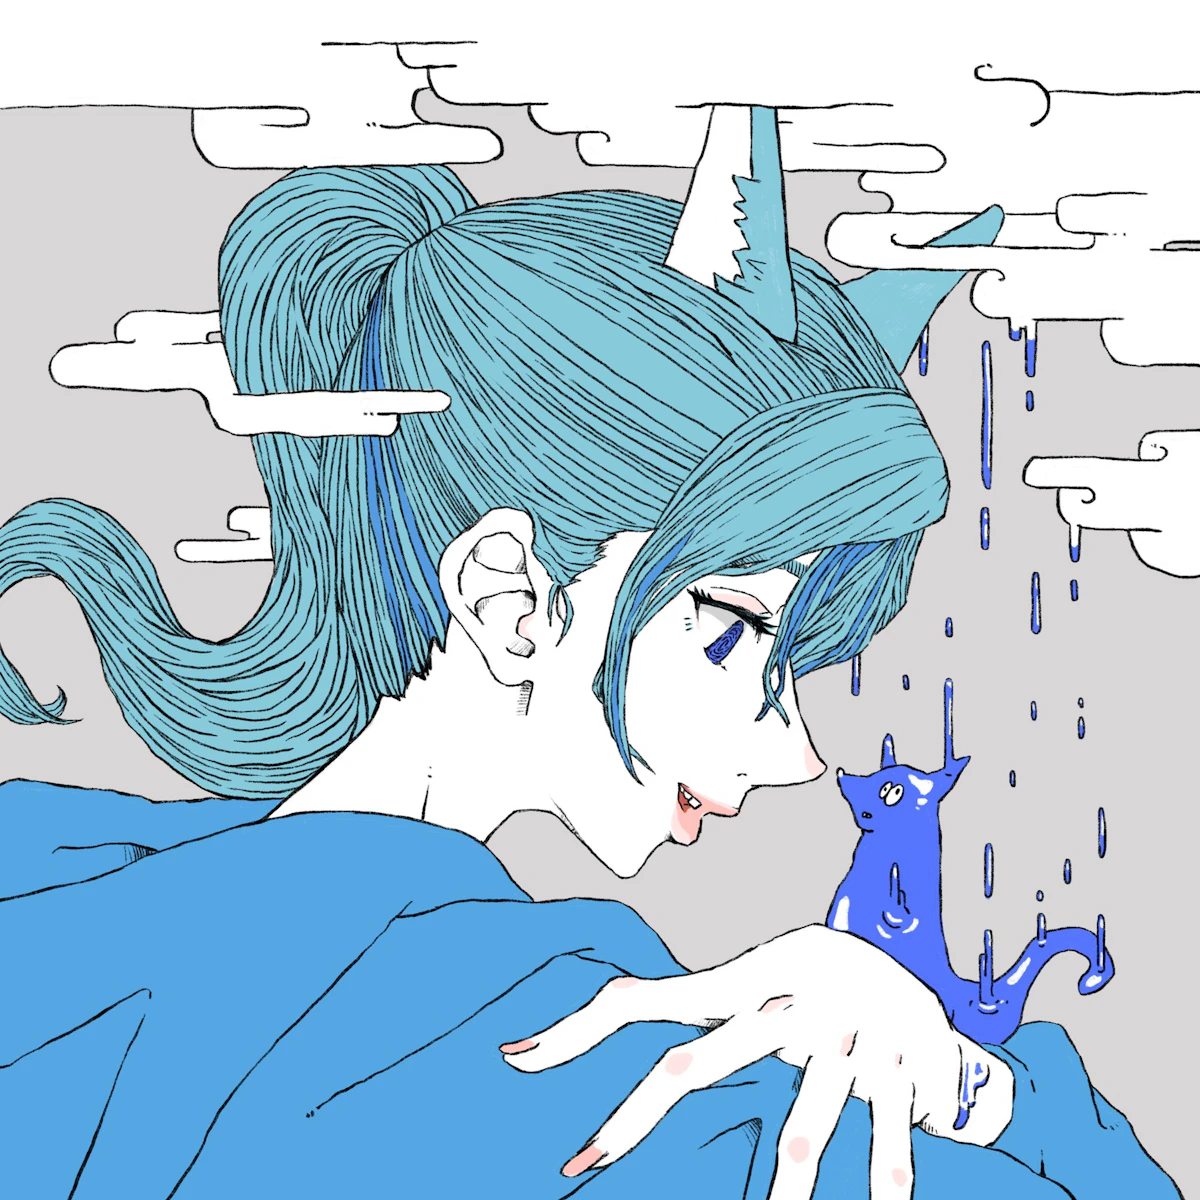 BLUE RAIN